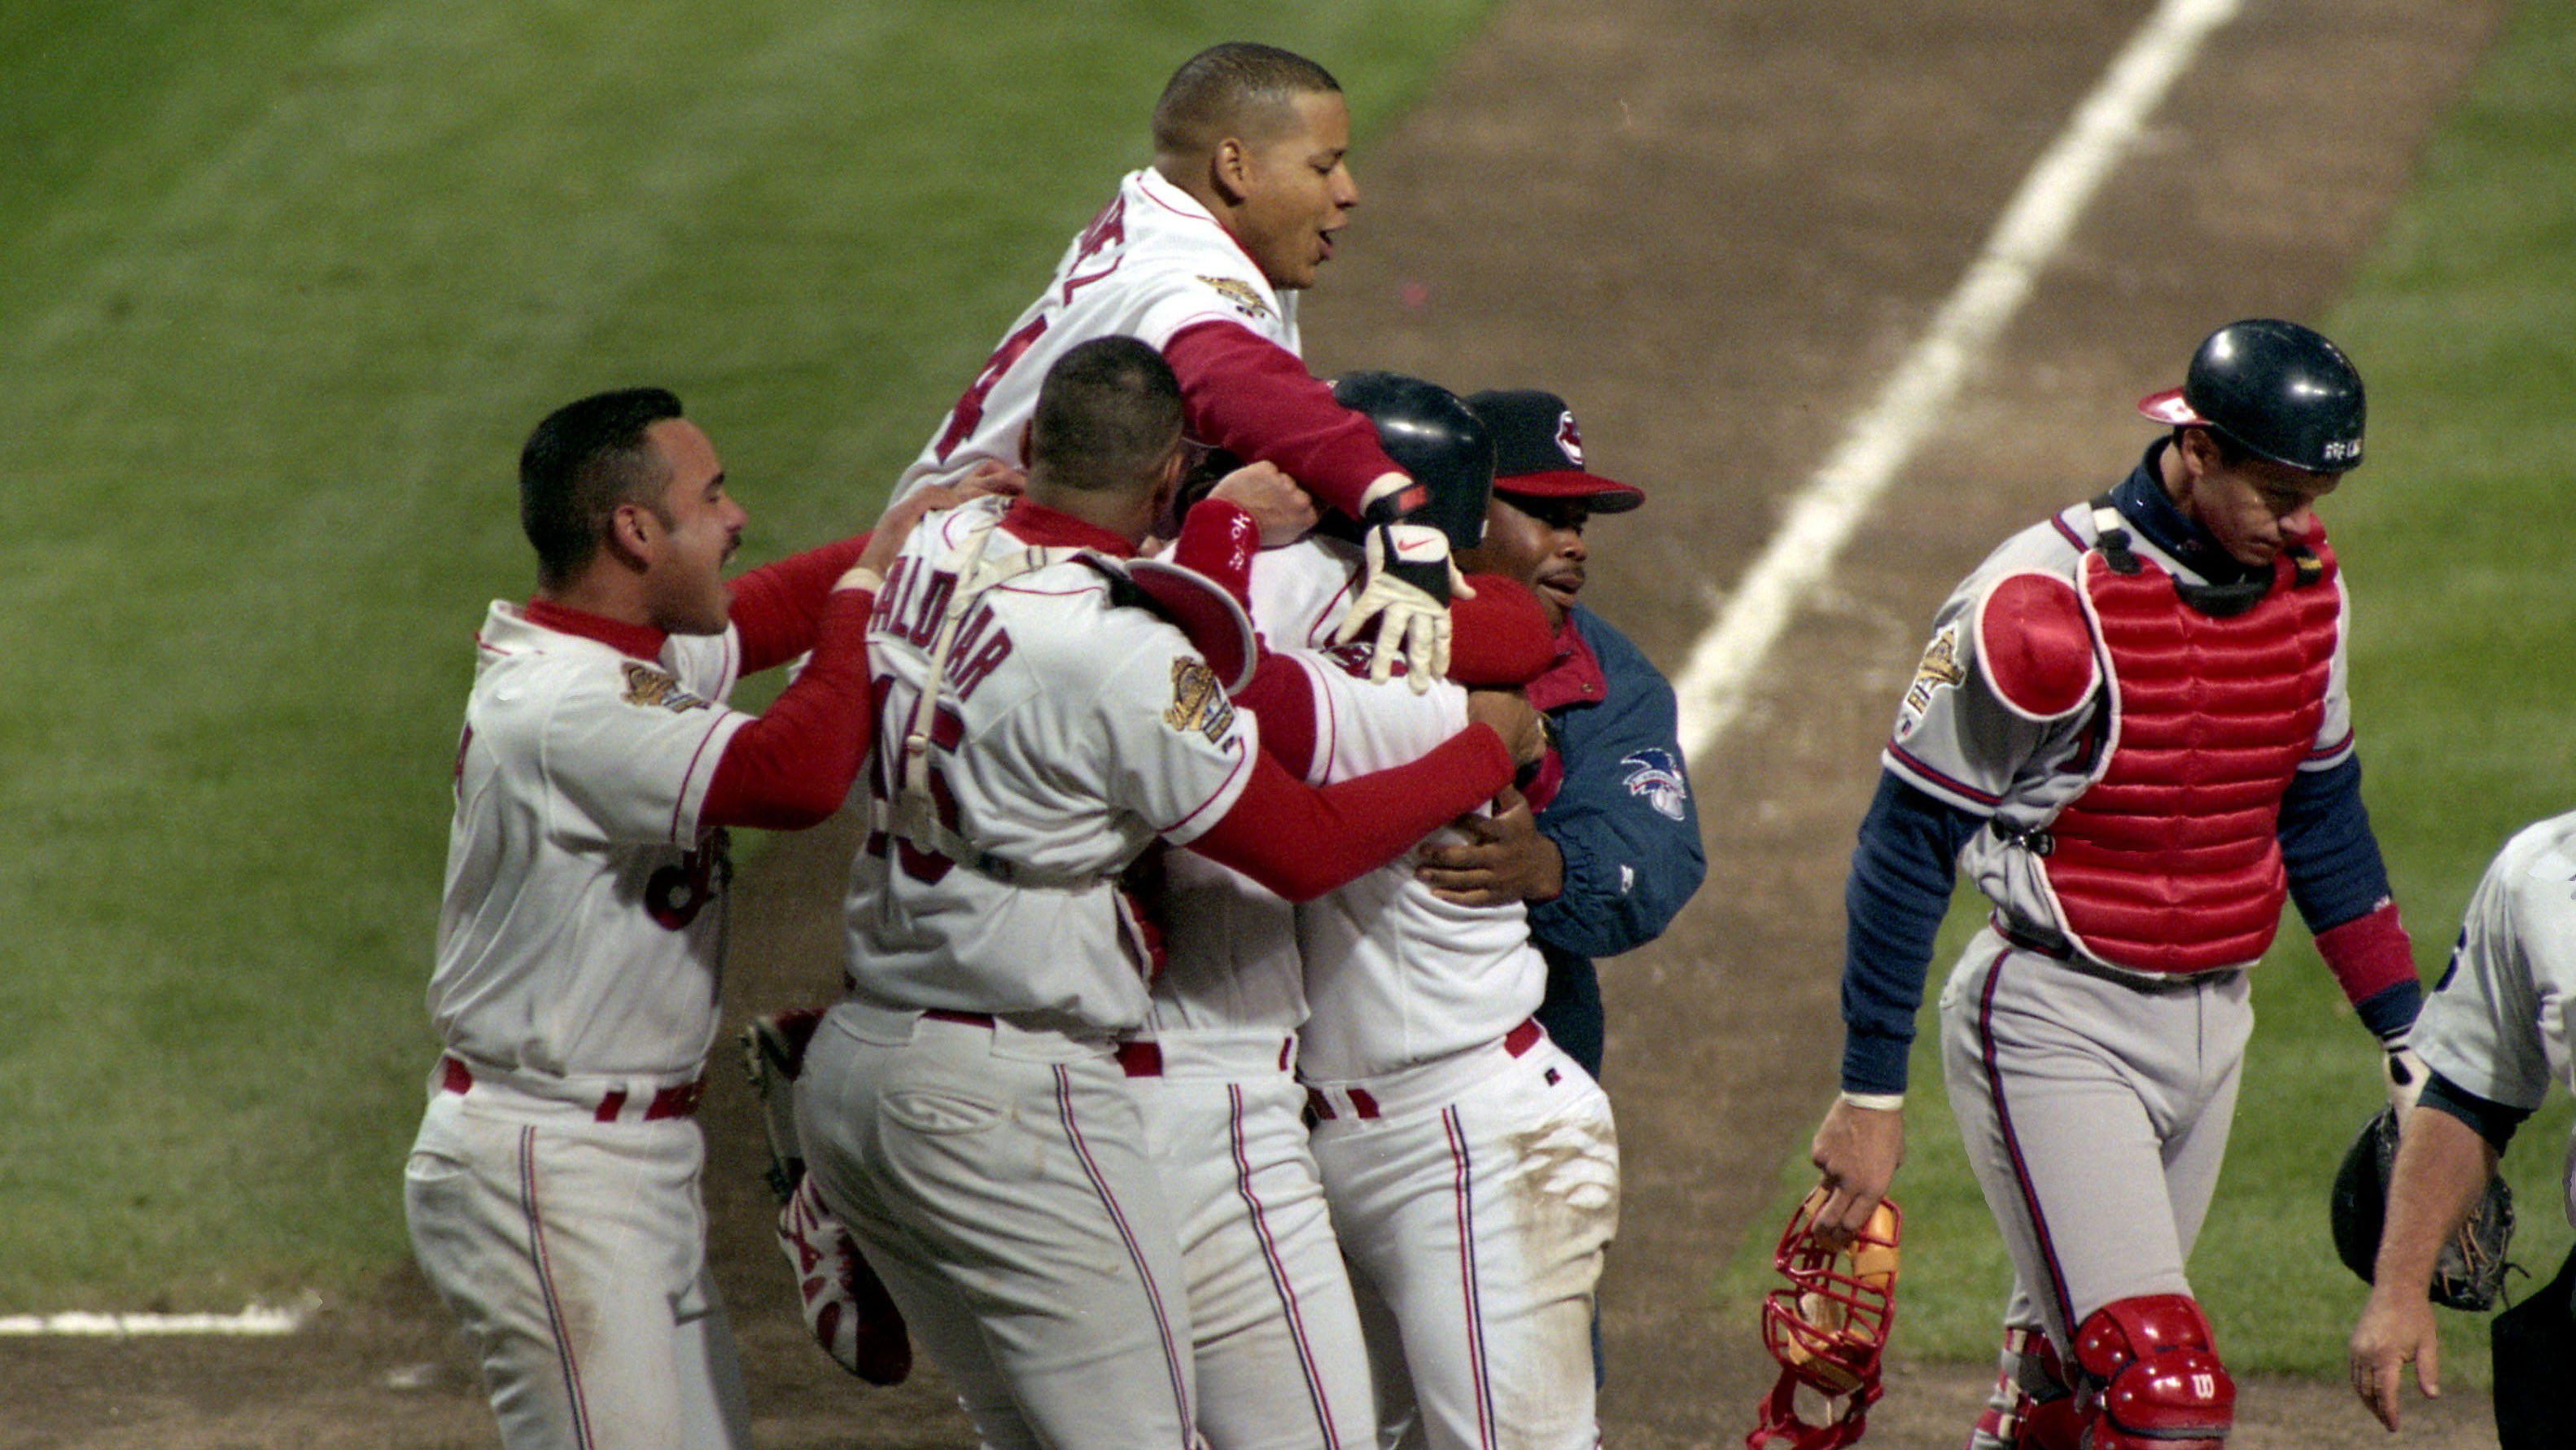 John Smoltz Jersey Atlanta Braves 1995 World Series Throwback